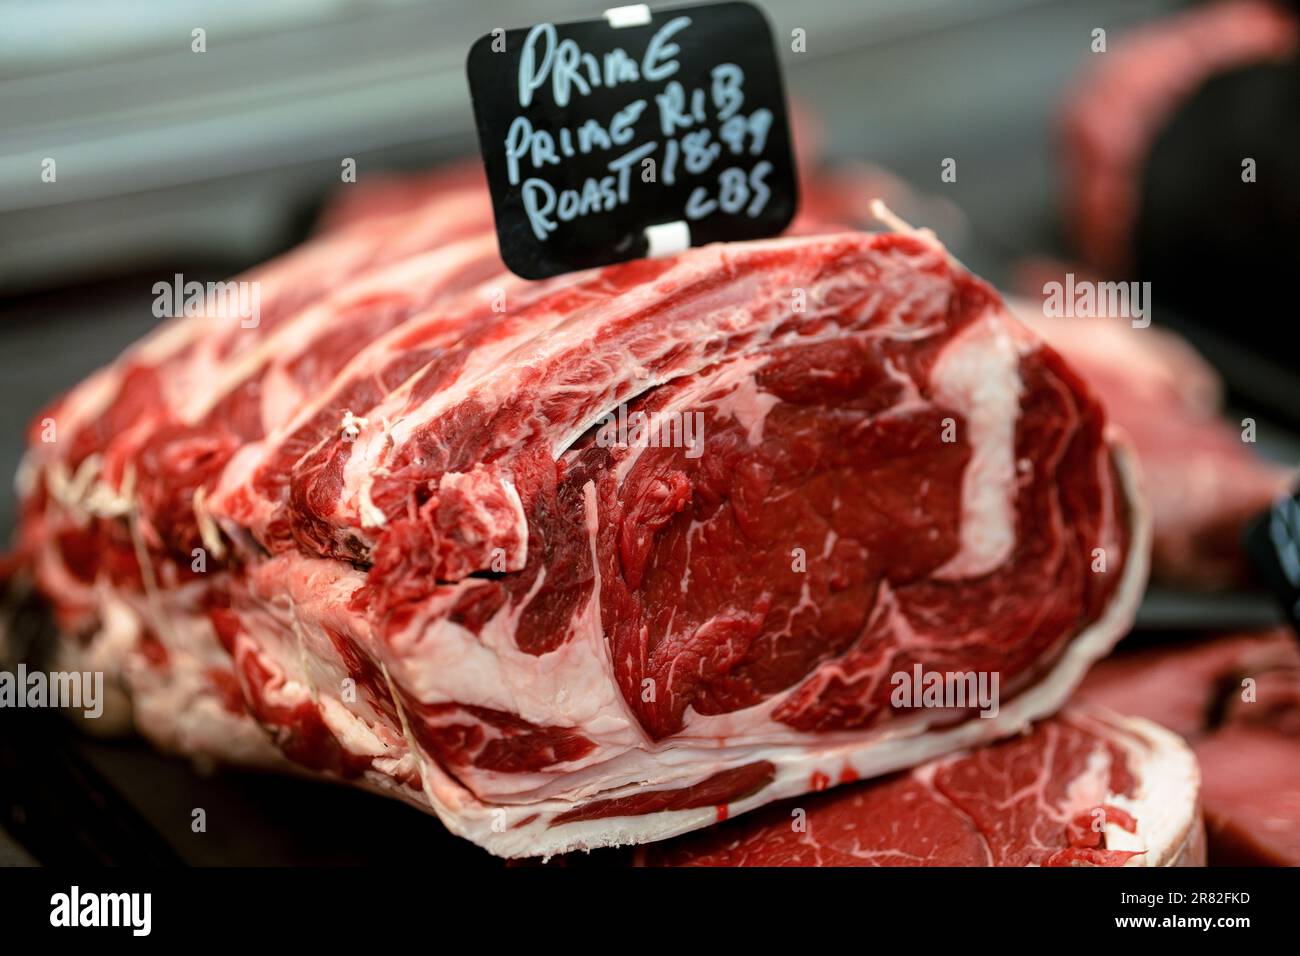 Meat Prices Canada Prime Rib Roast Price Stock Photo